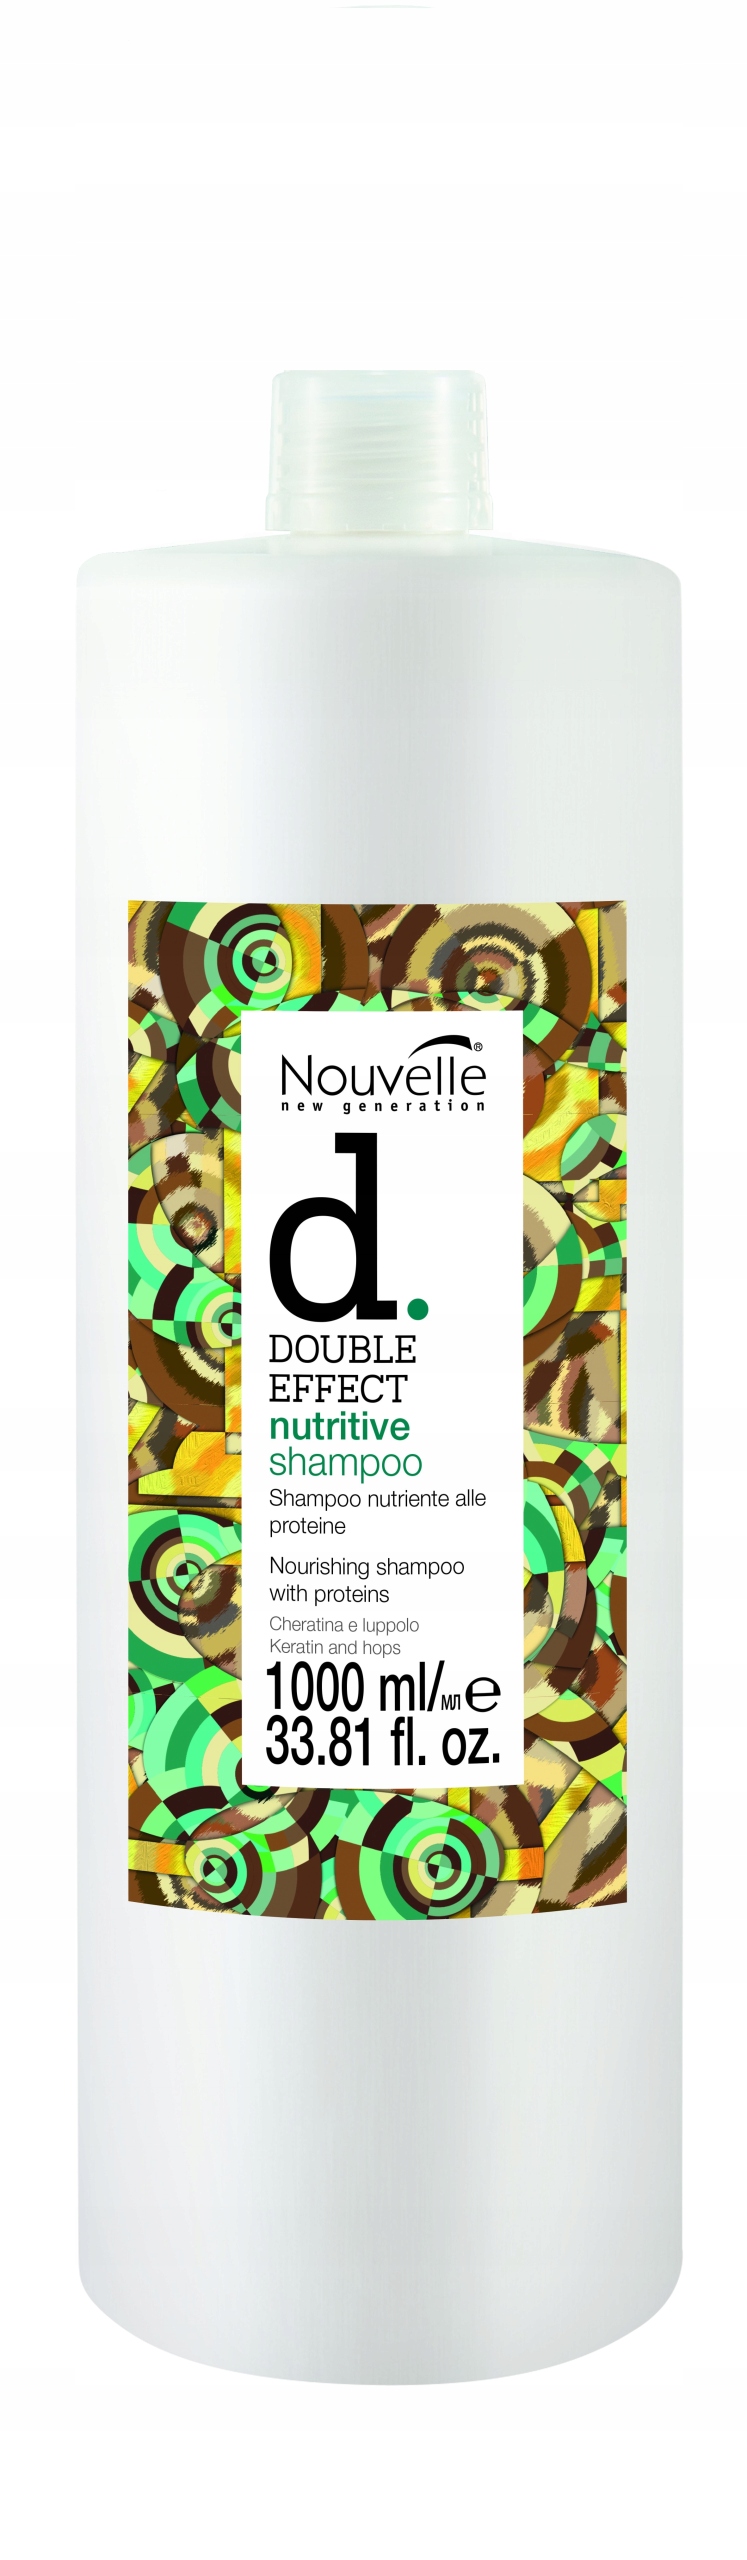 nouvelle szampon wzmacniający